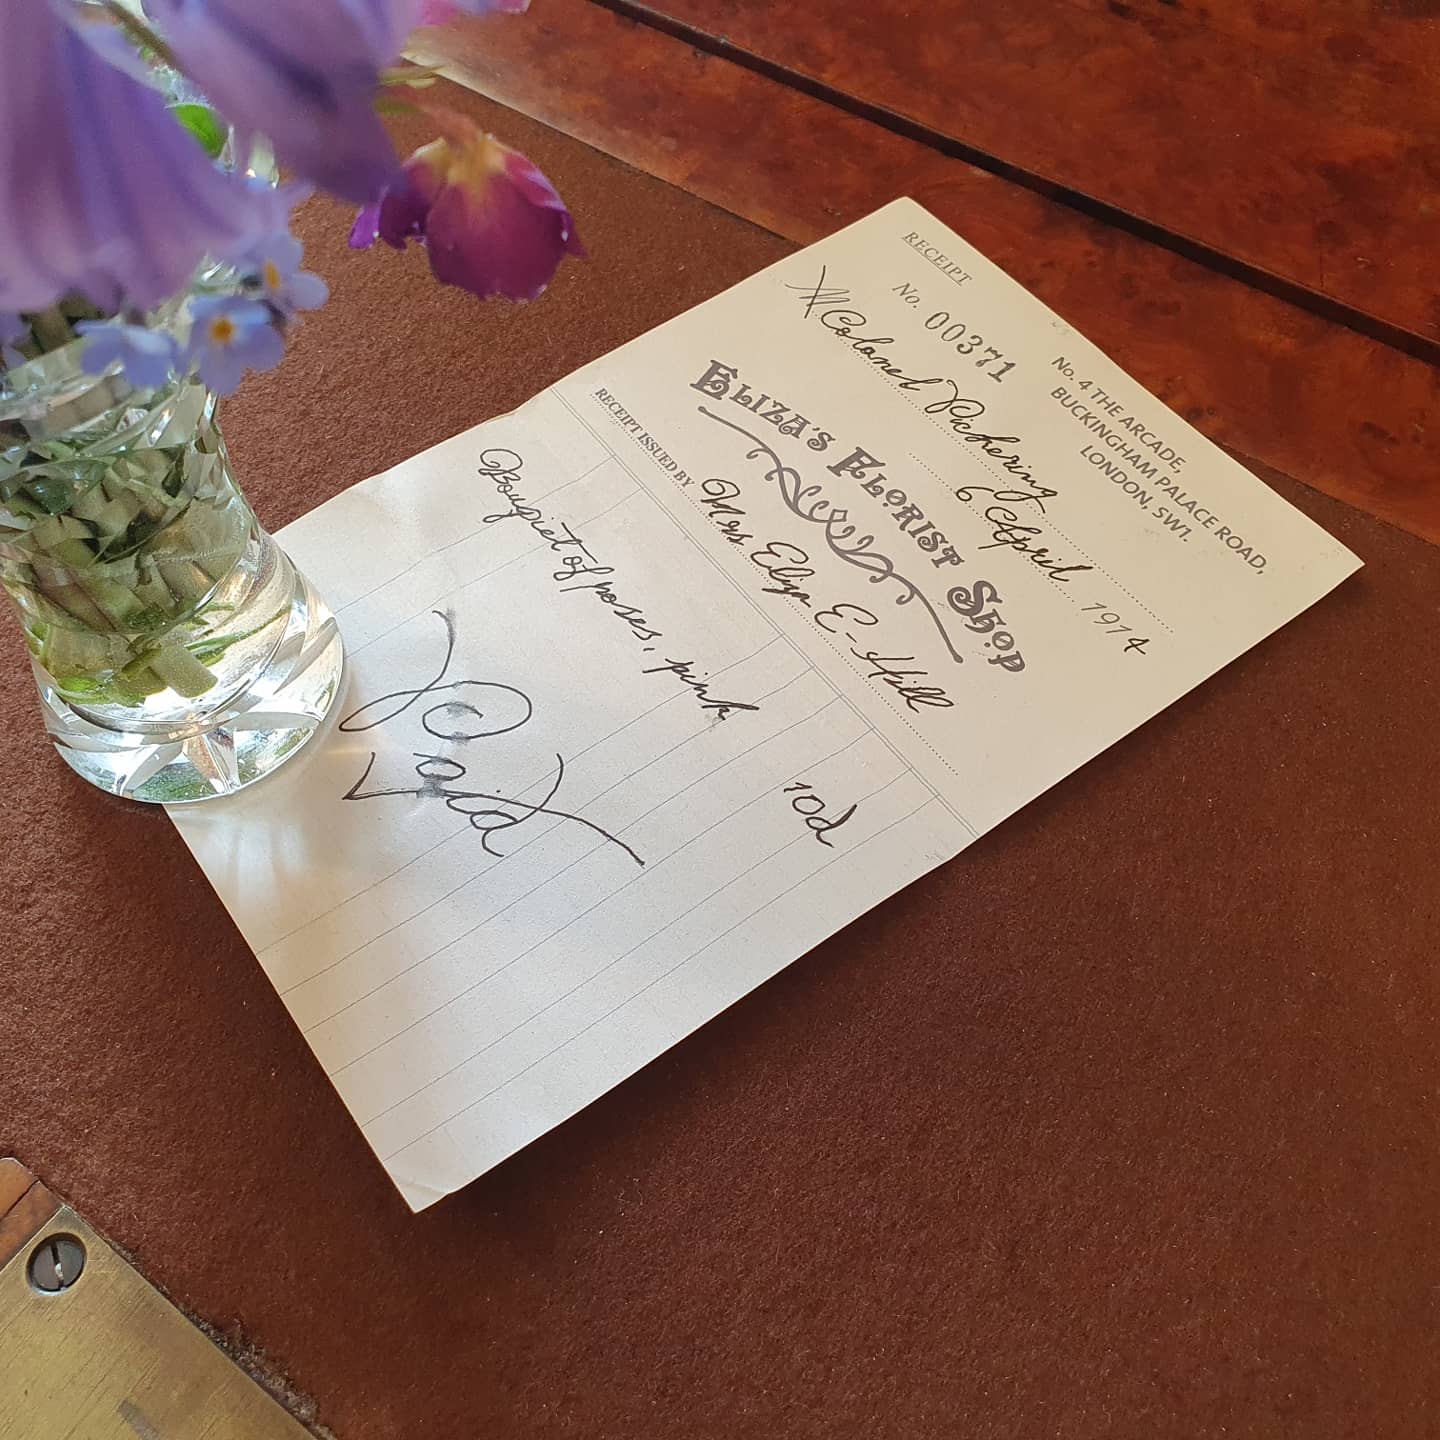 Eliza: Pickering's Florist Shop Receipt 2/5